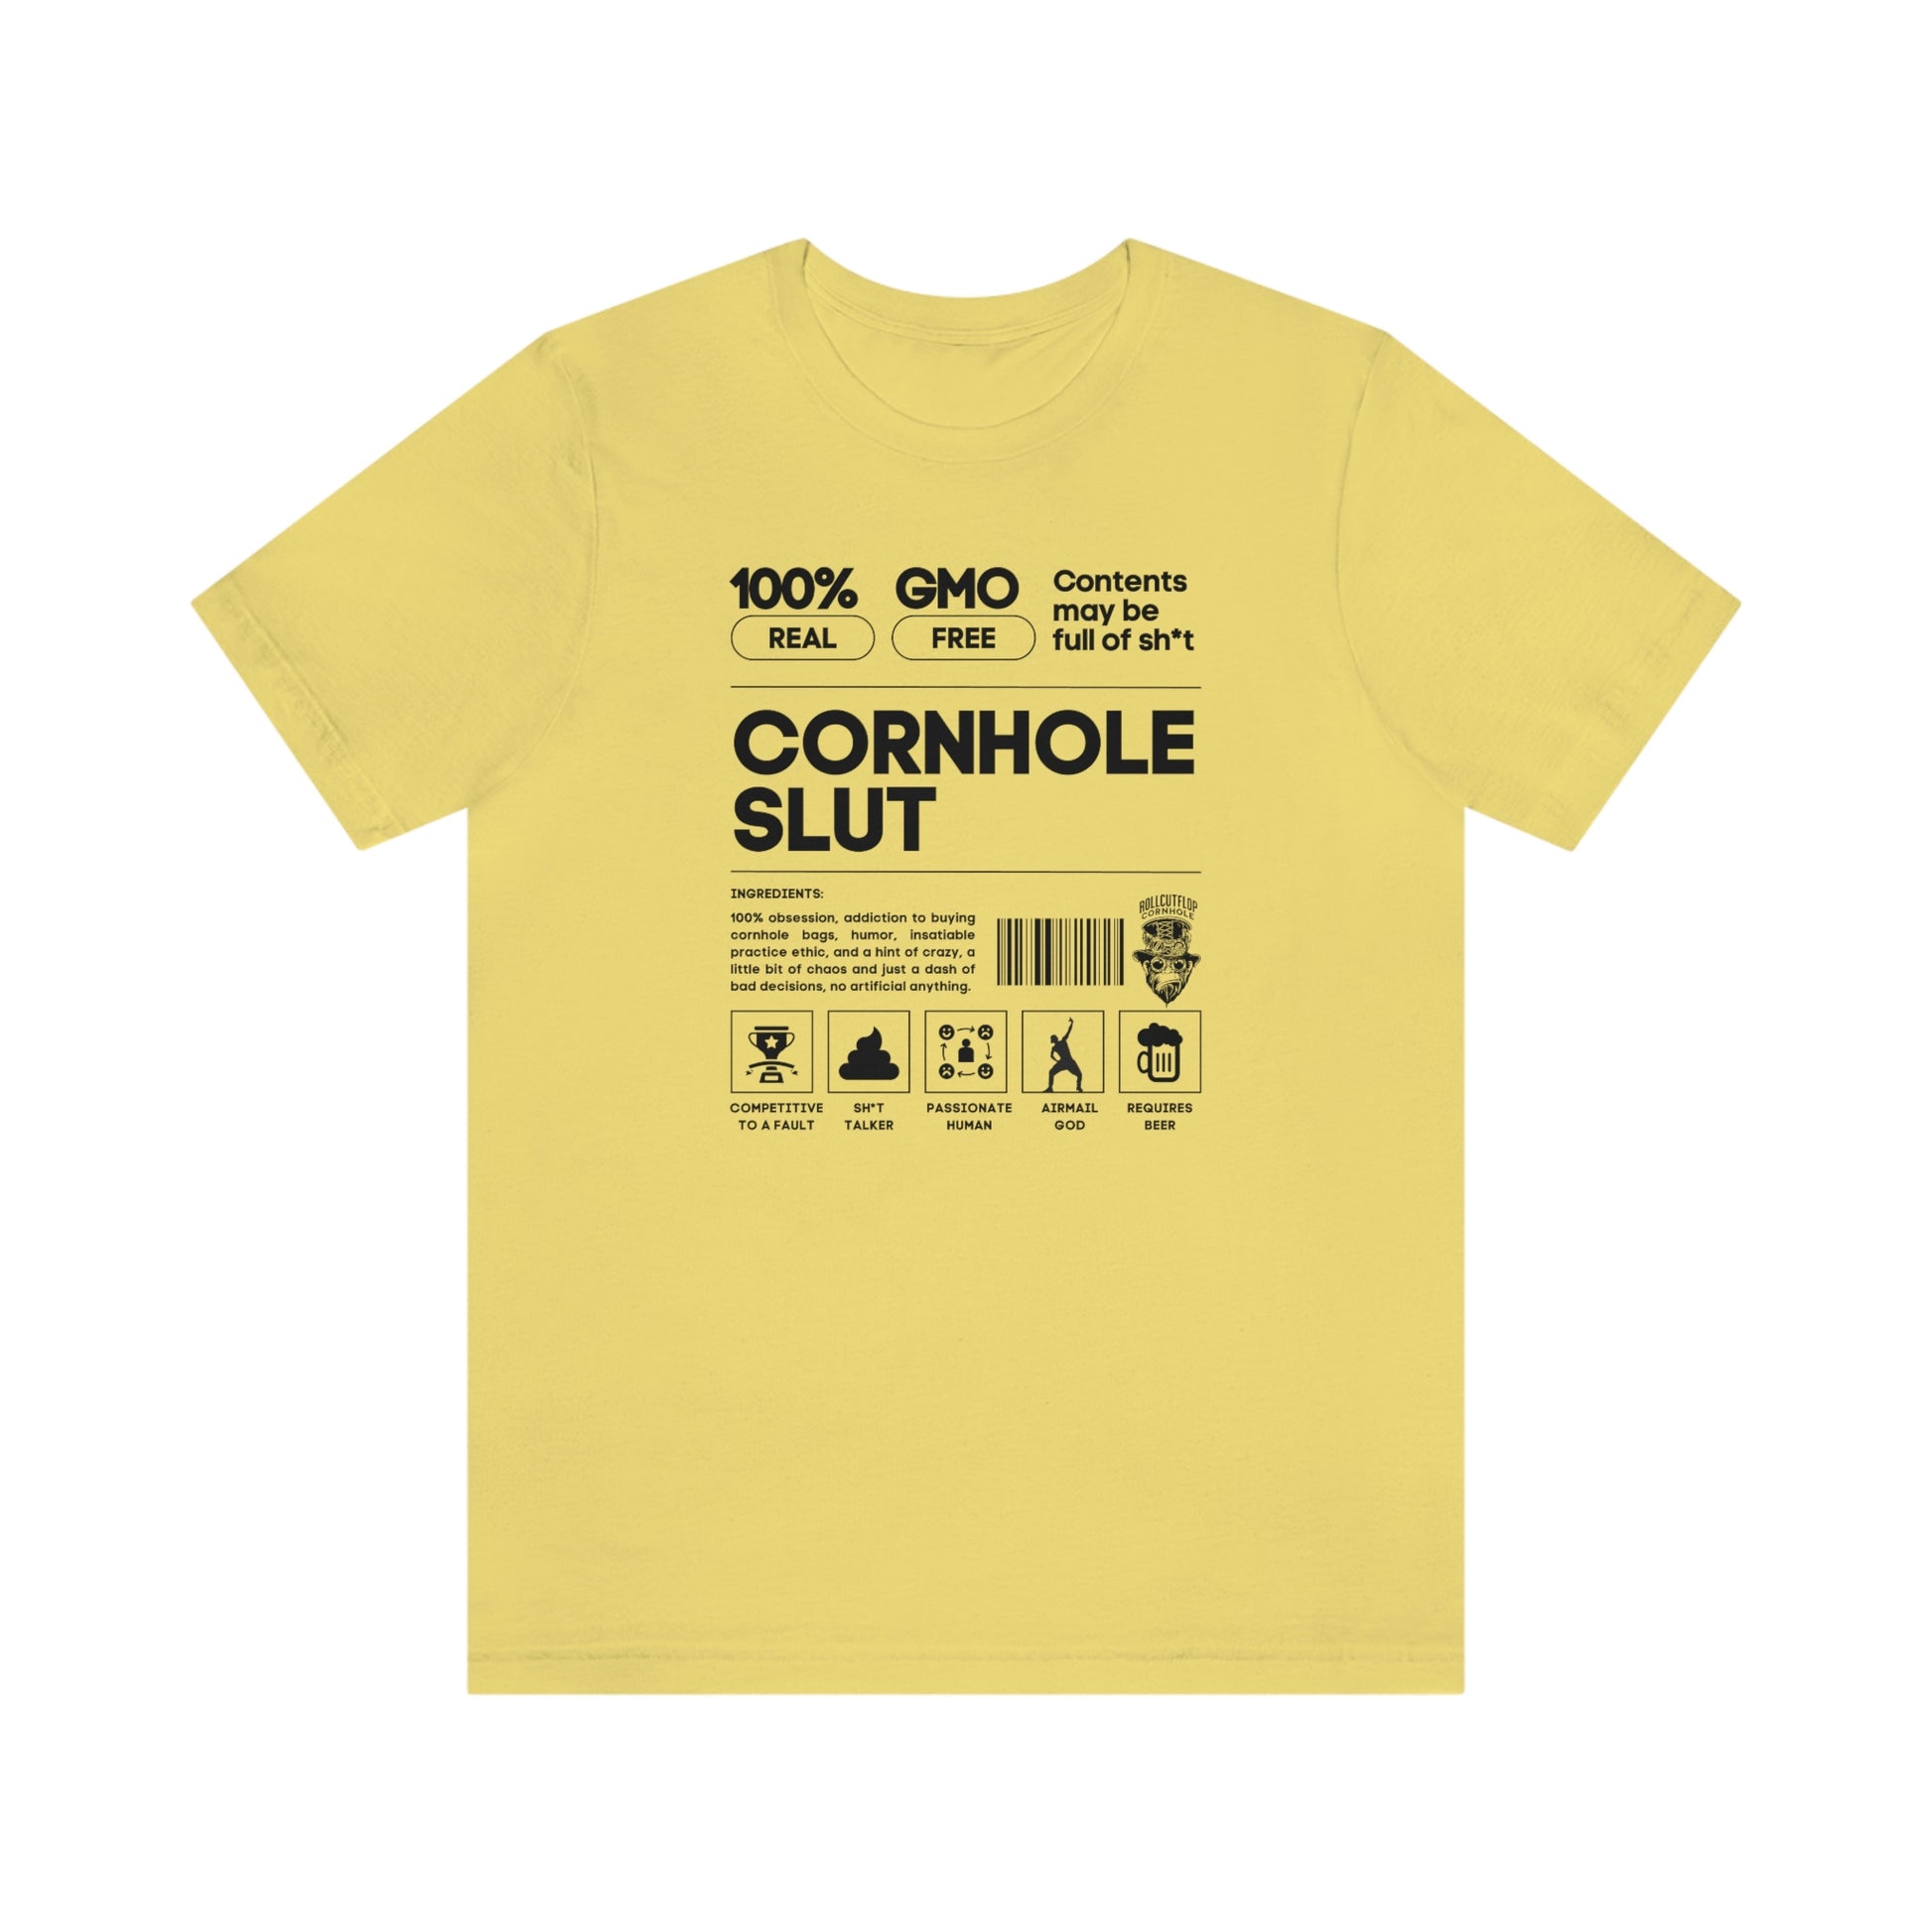 Cornhole Slut Unisex Jersey Yellow Tee - Cornhole Obsession Label & Roll Cut Flop Cornhole Barcode